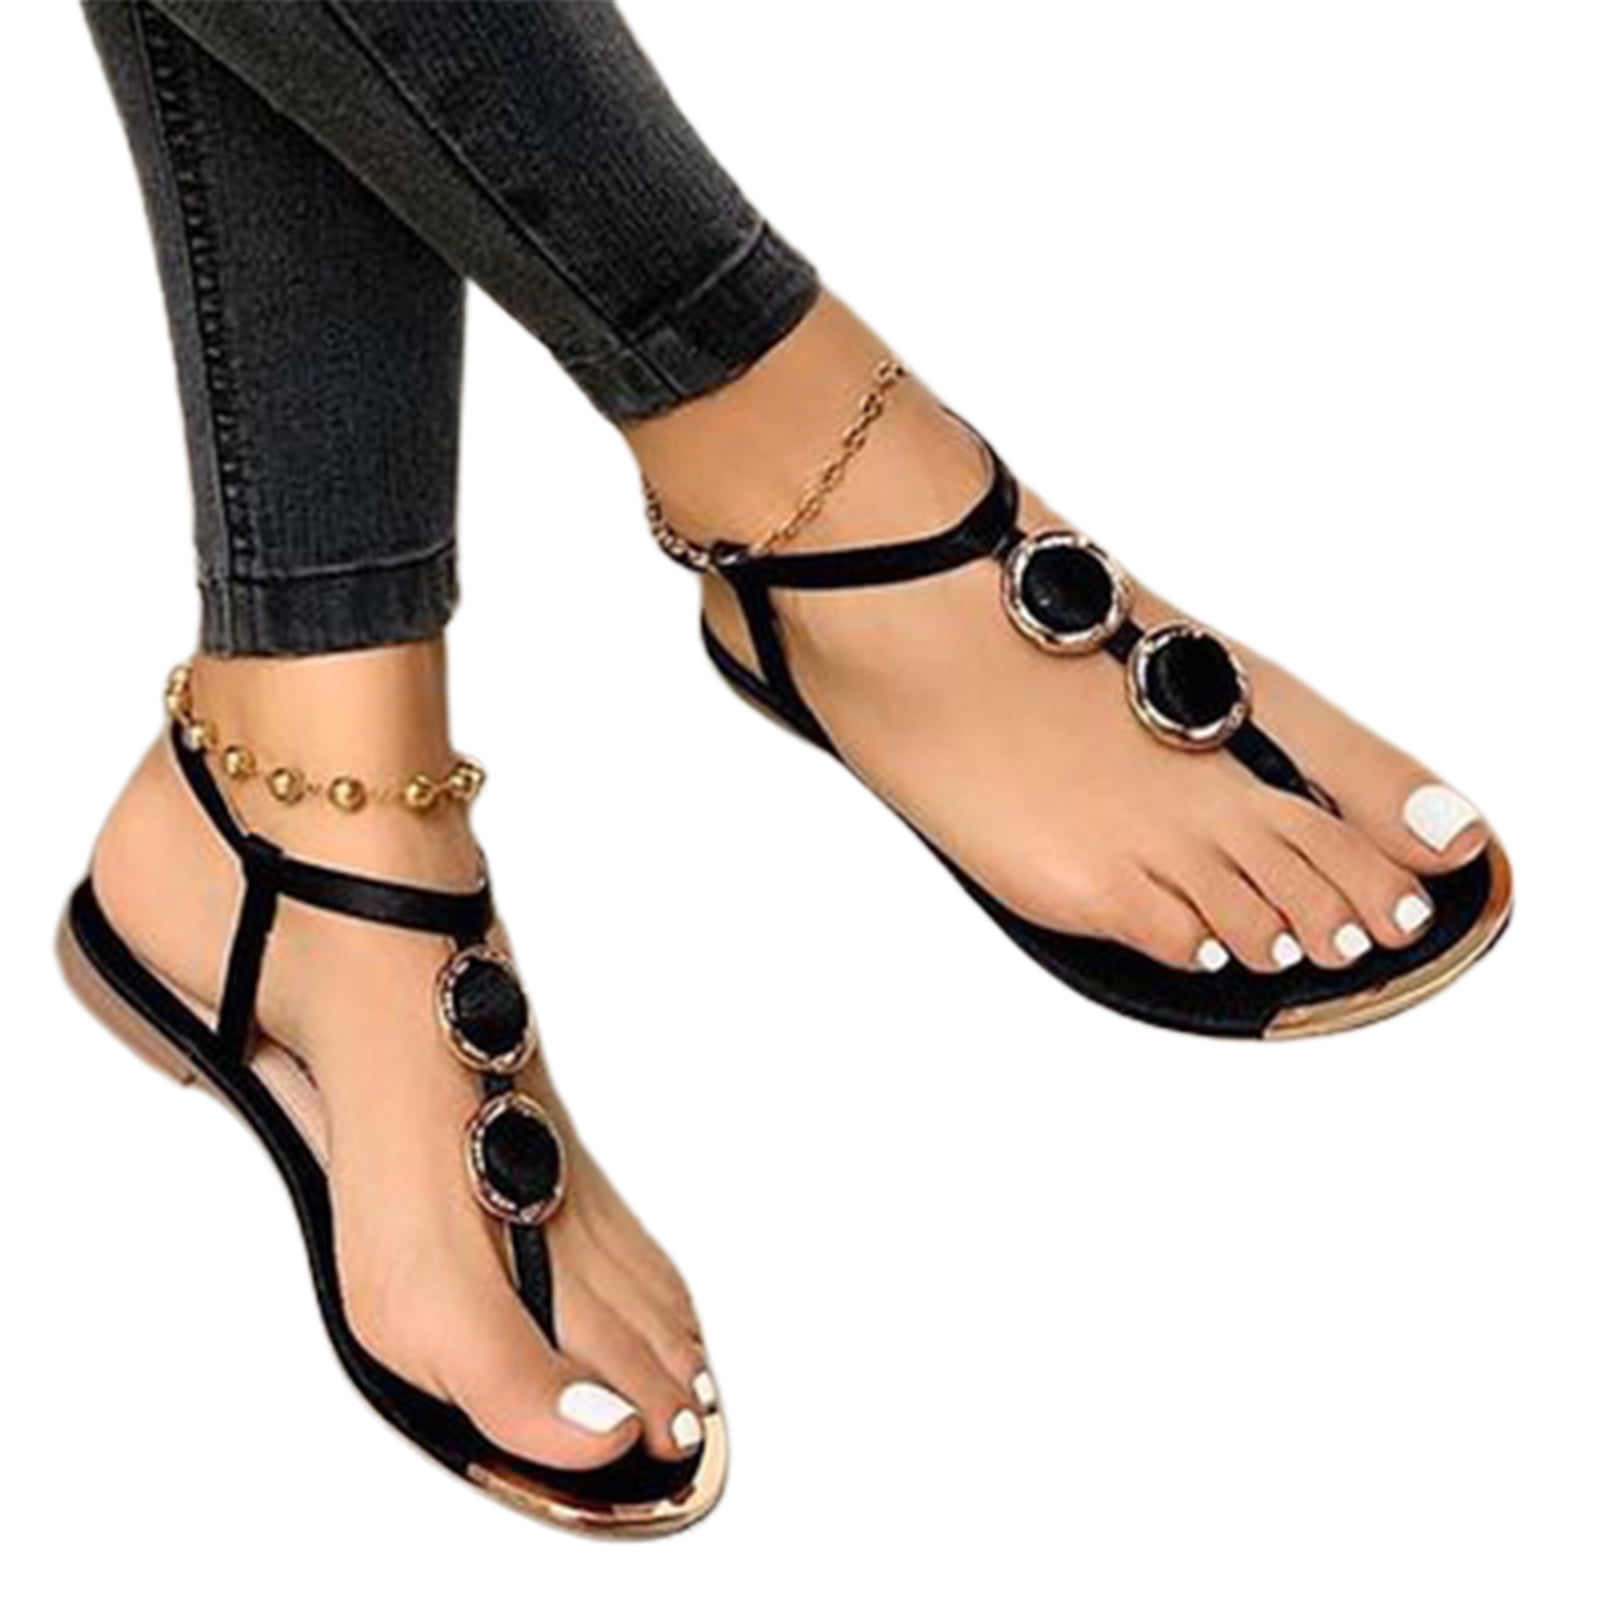 Sandals for Women Dressy Summer Womens Roman Sandals Slip On Ankle Strap Flip Flop Casual Summer Beach Gladiator Sandals 